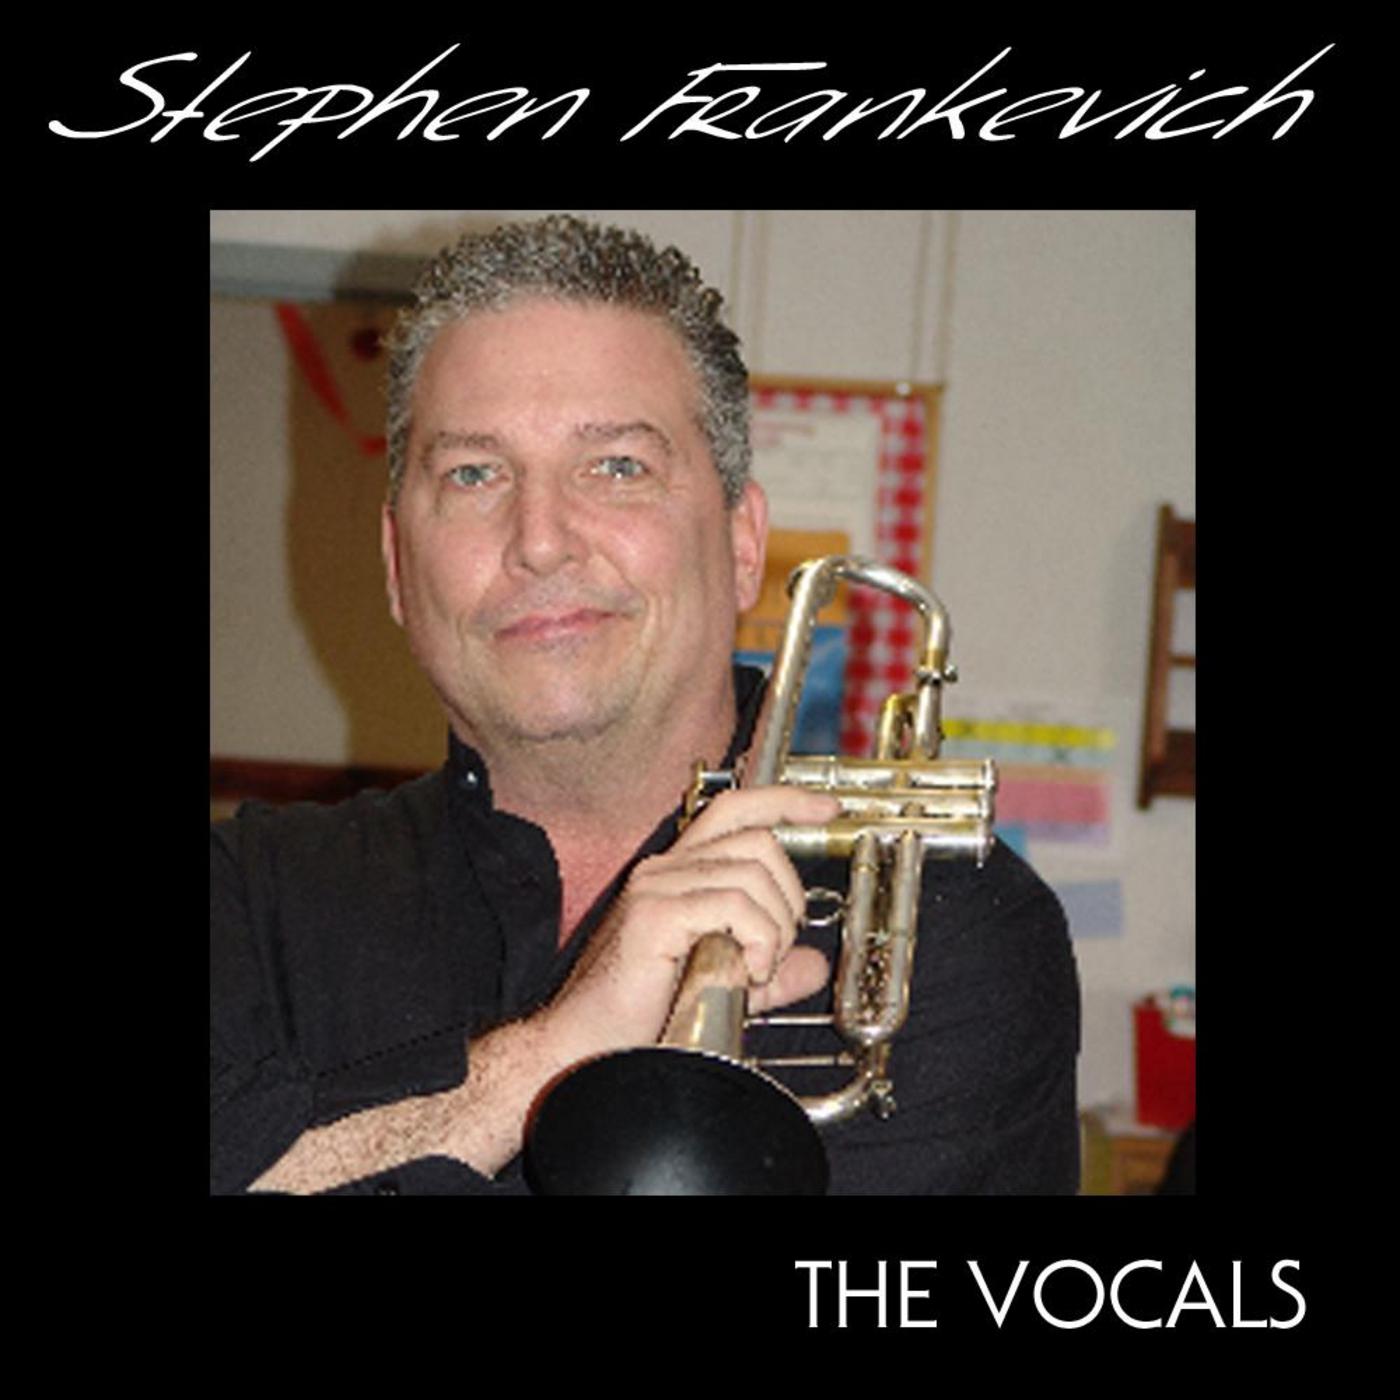 Stephen Franckevich - Something of a Wonder